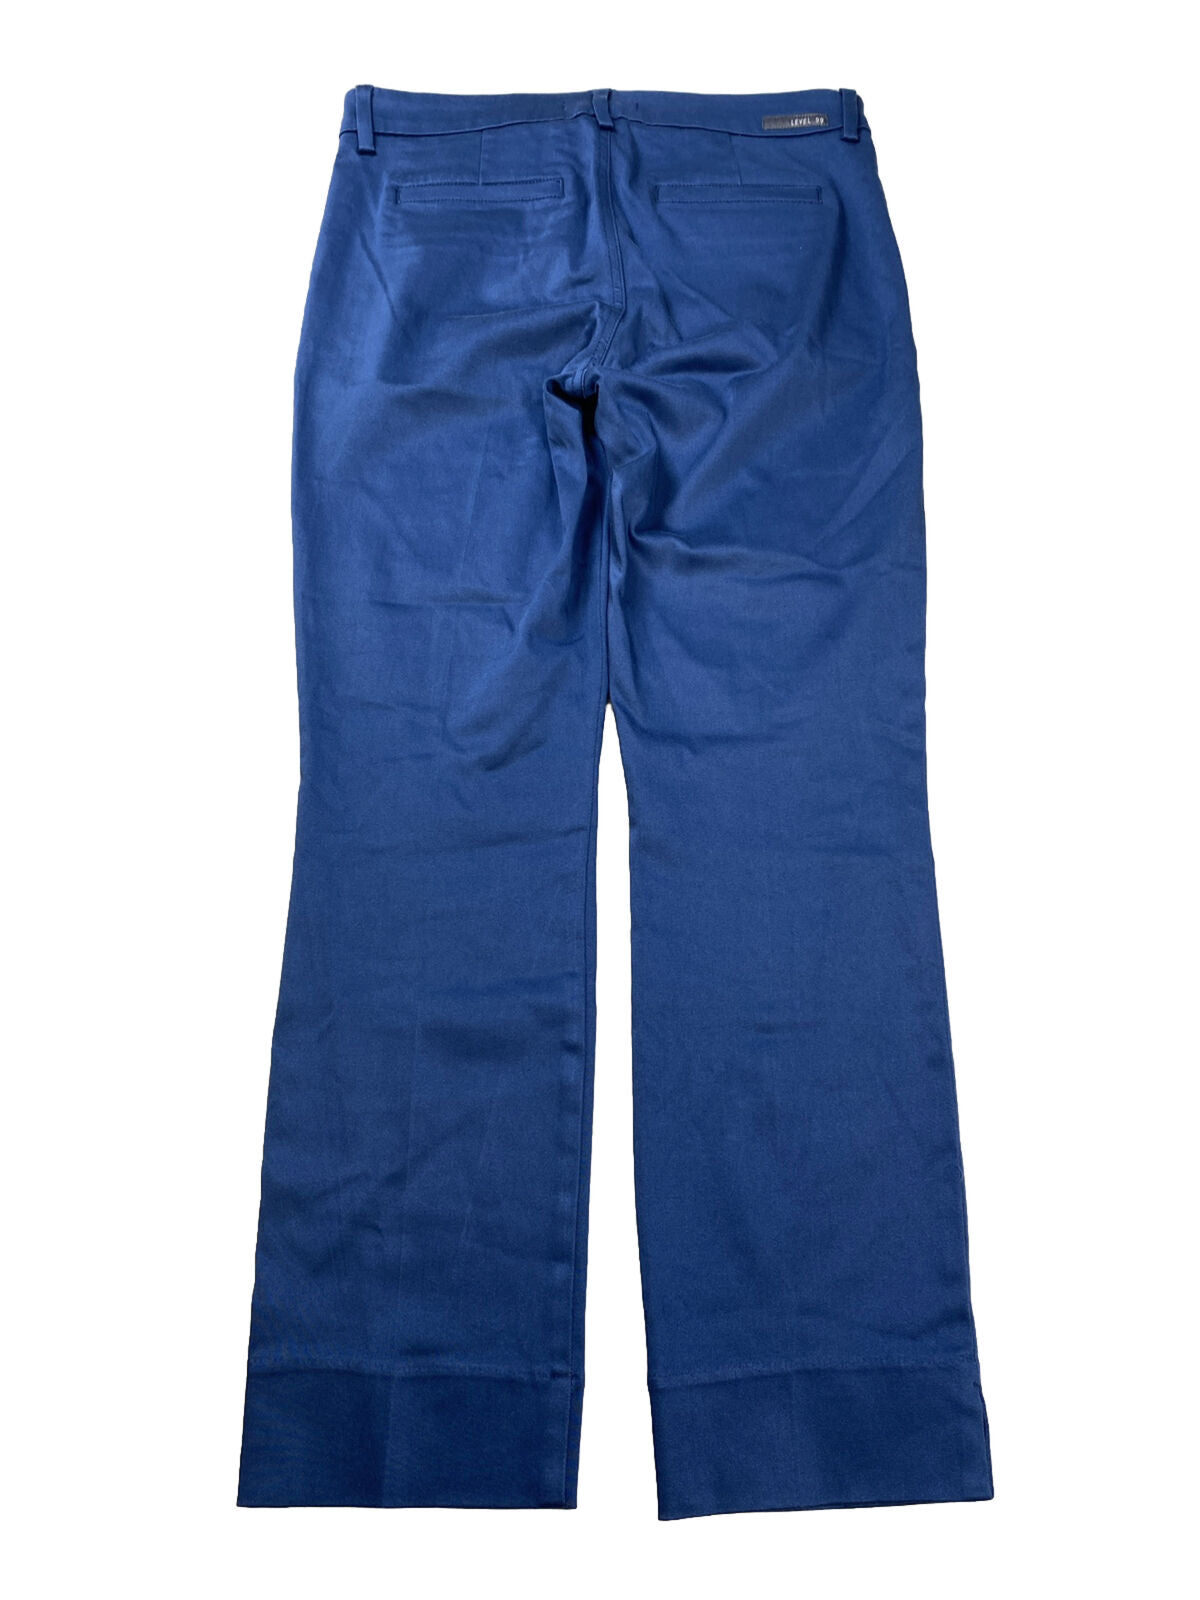 Level 99 Women's Blue Slim Fit Skinny Pants - 28